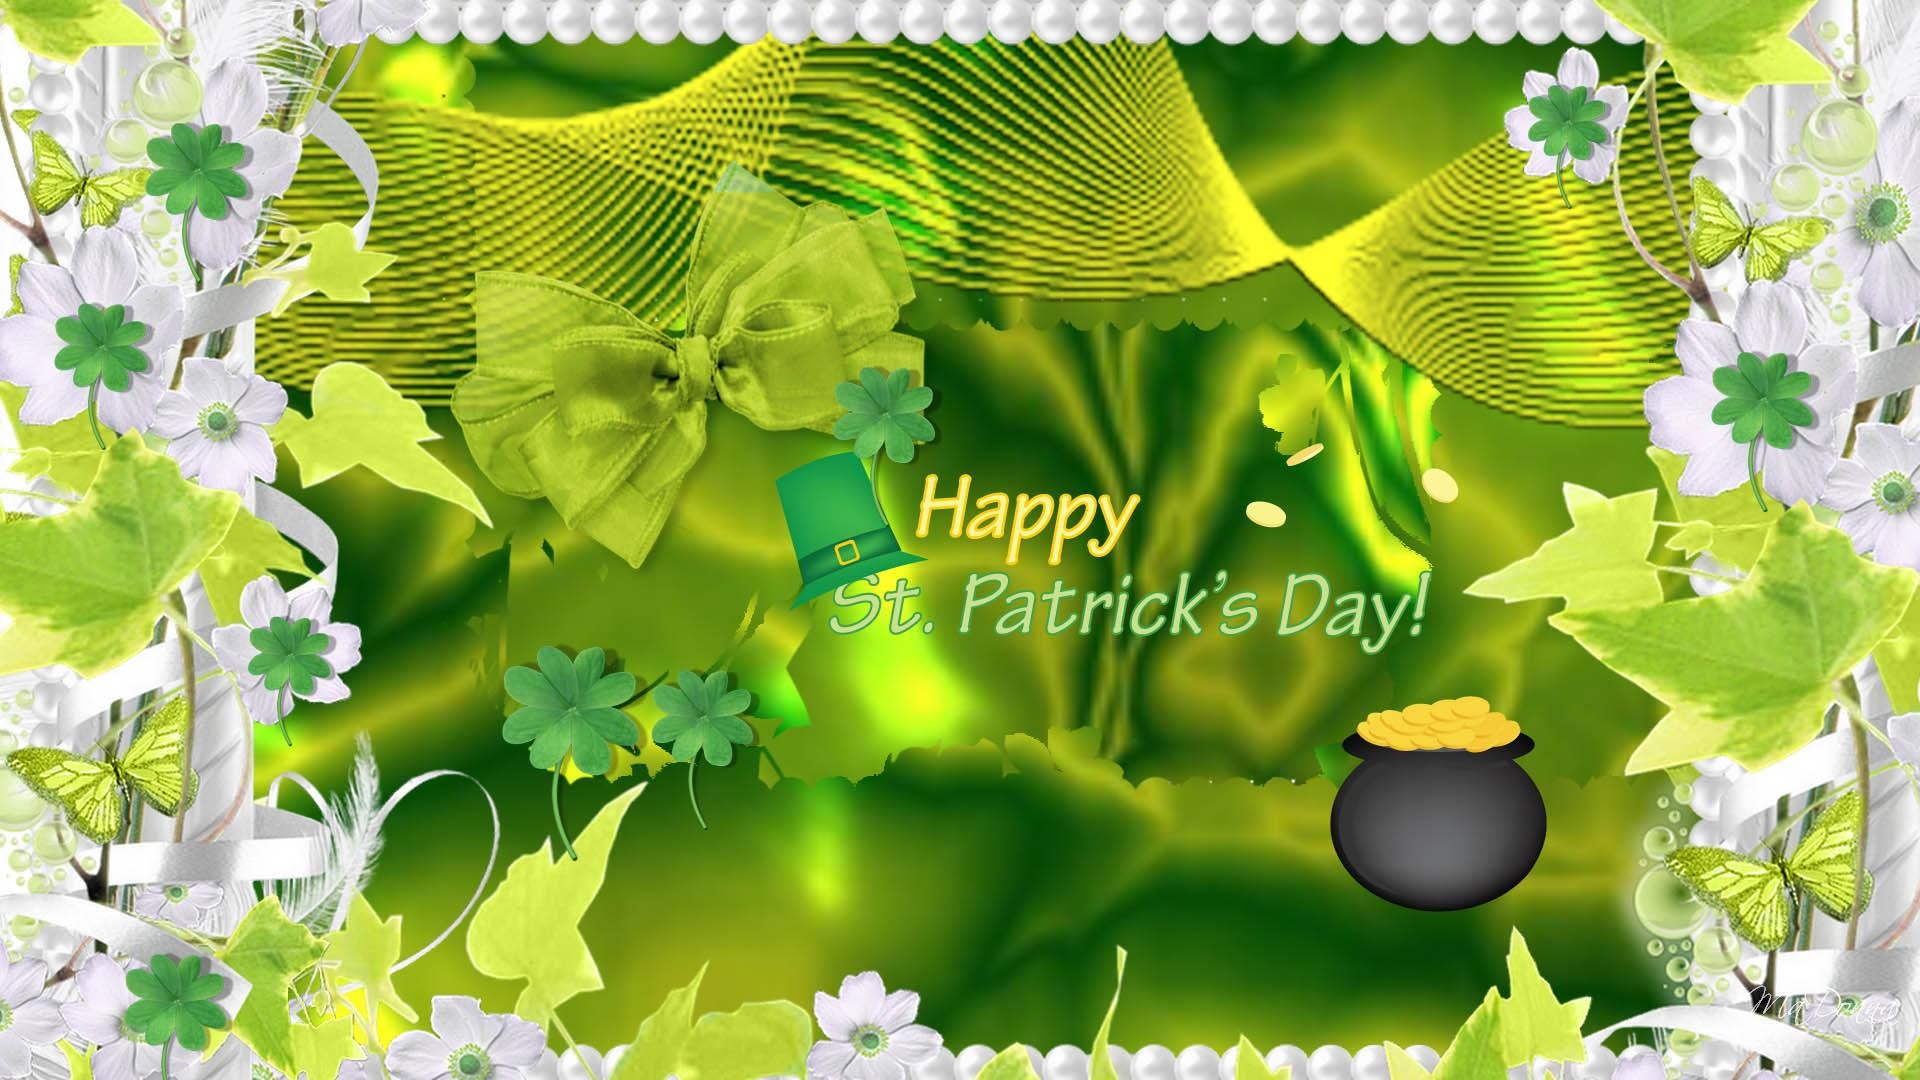  St Patrick's Day Desktop Wallpaper